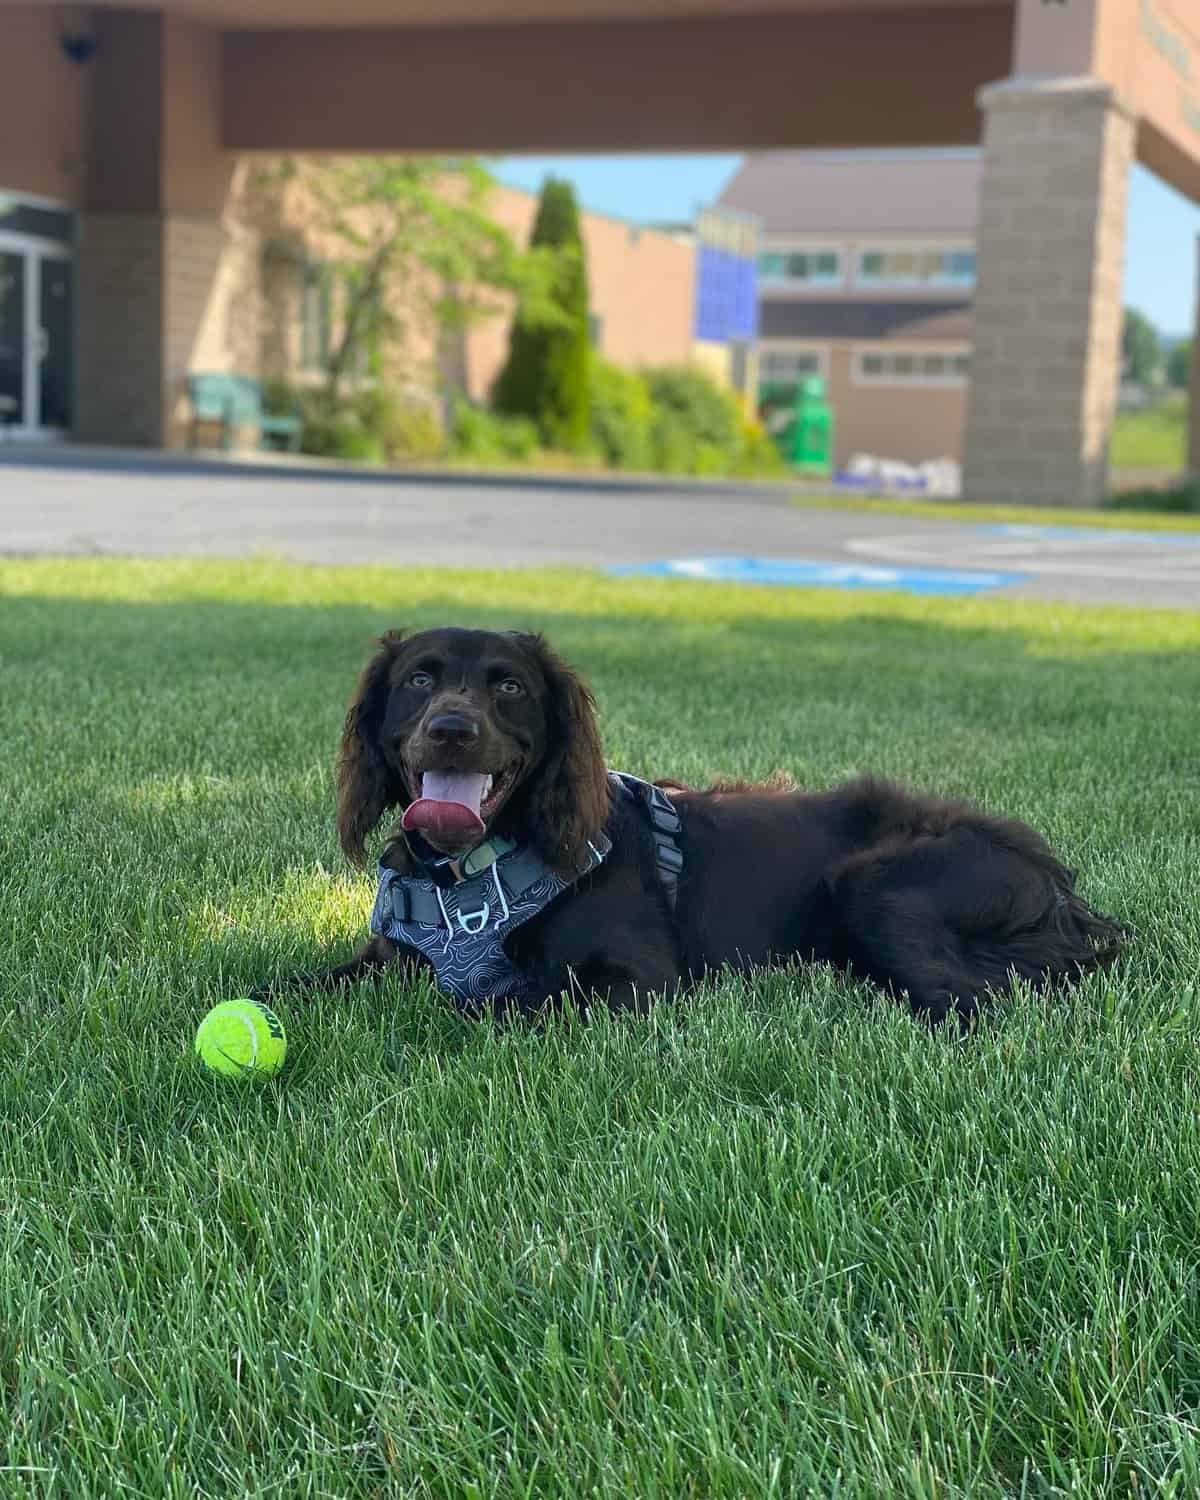 A playful Boykin Spaniel enjoying the tennis ball